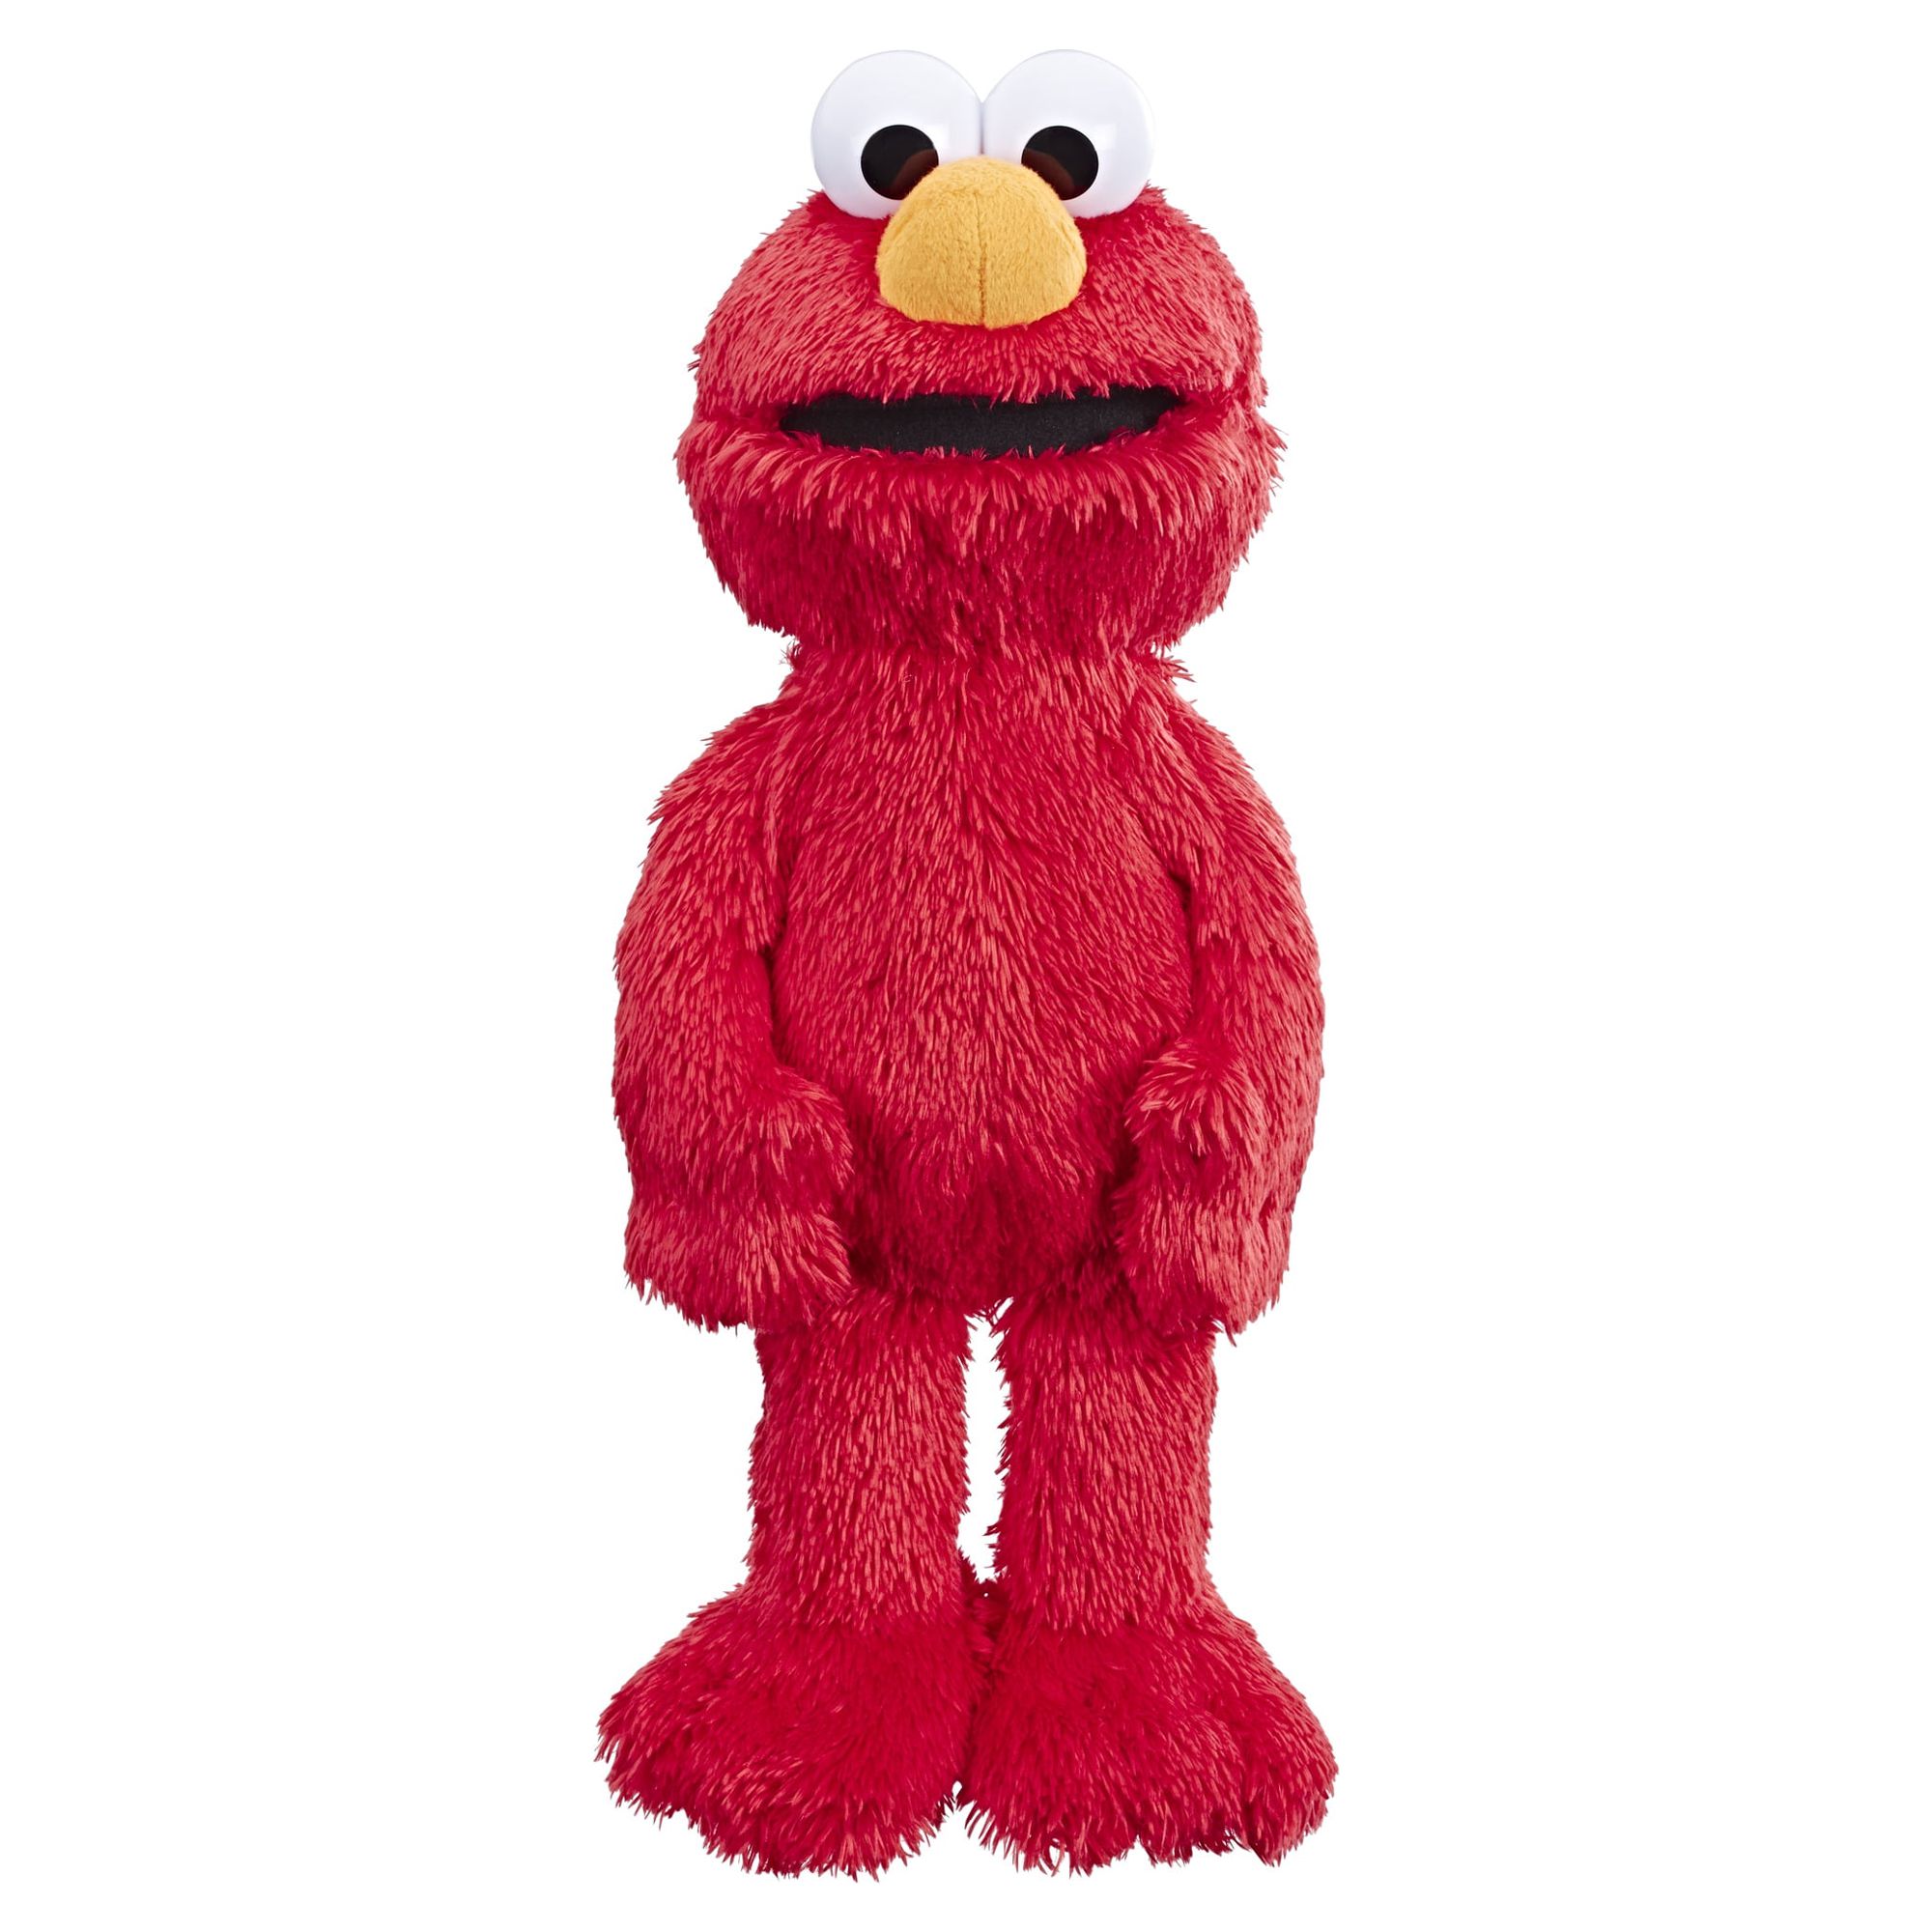 Sesame Street Love to Hug Elmo: Talking, Singing, Hugging, 14-Inch Figure - image 1 of 16